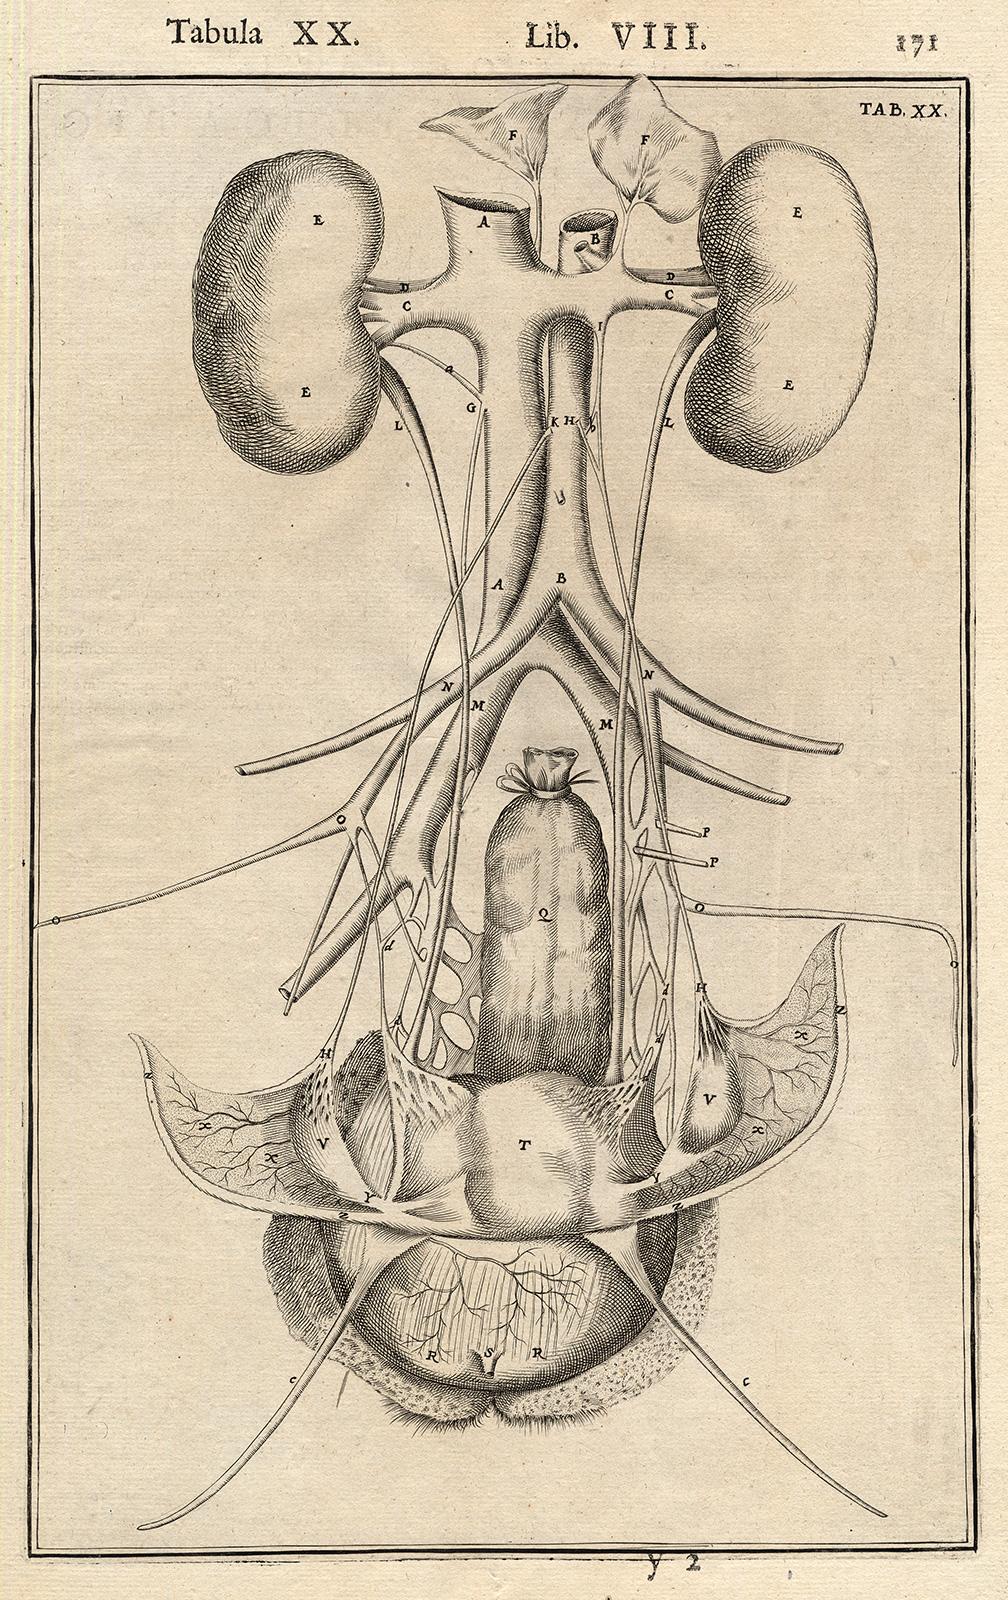 2 anatomical prints - Female organs by Spigelius - Engraving - 17th century - Print by Adrianus Spigelius